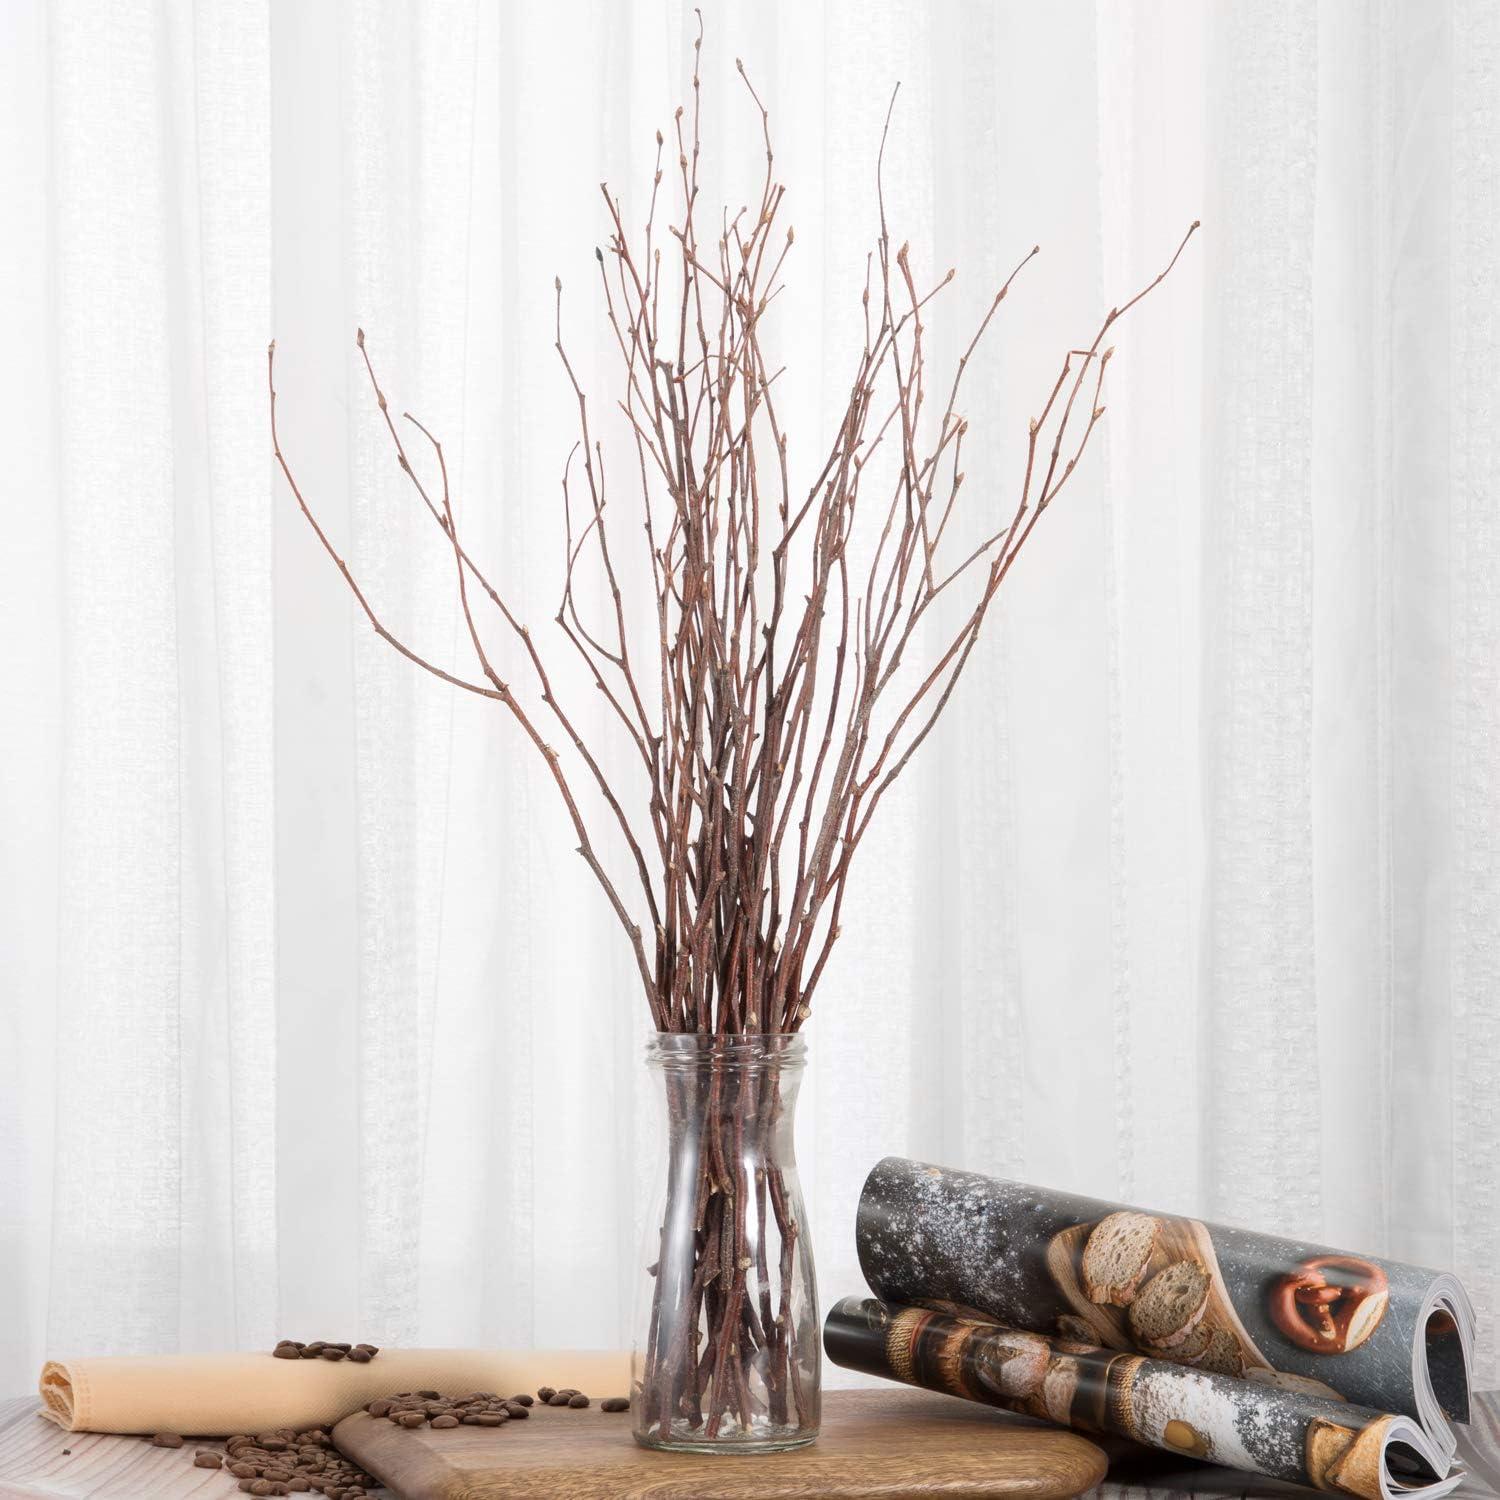 Alater 200pcs Birch Twigs 100% Natural Birch Branches for Decorating DIY Crafts Flower Arrangement Decorative Birch Sticks for Vase Centerpieces